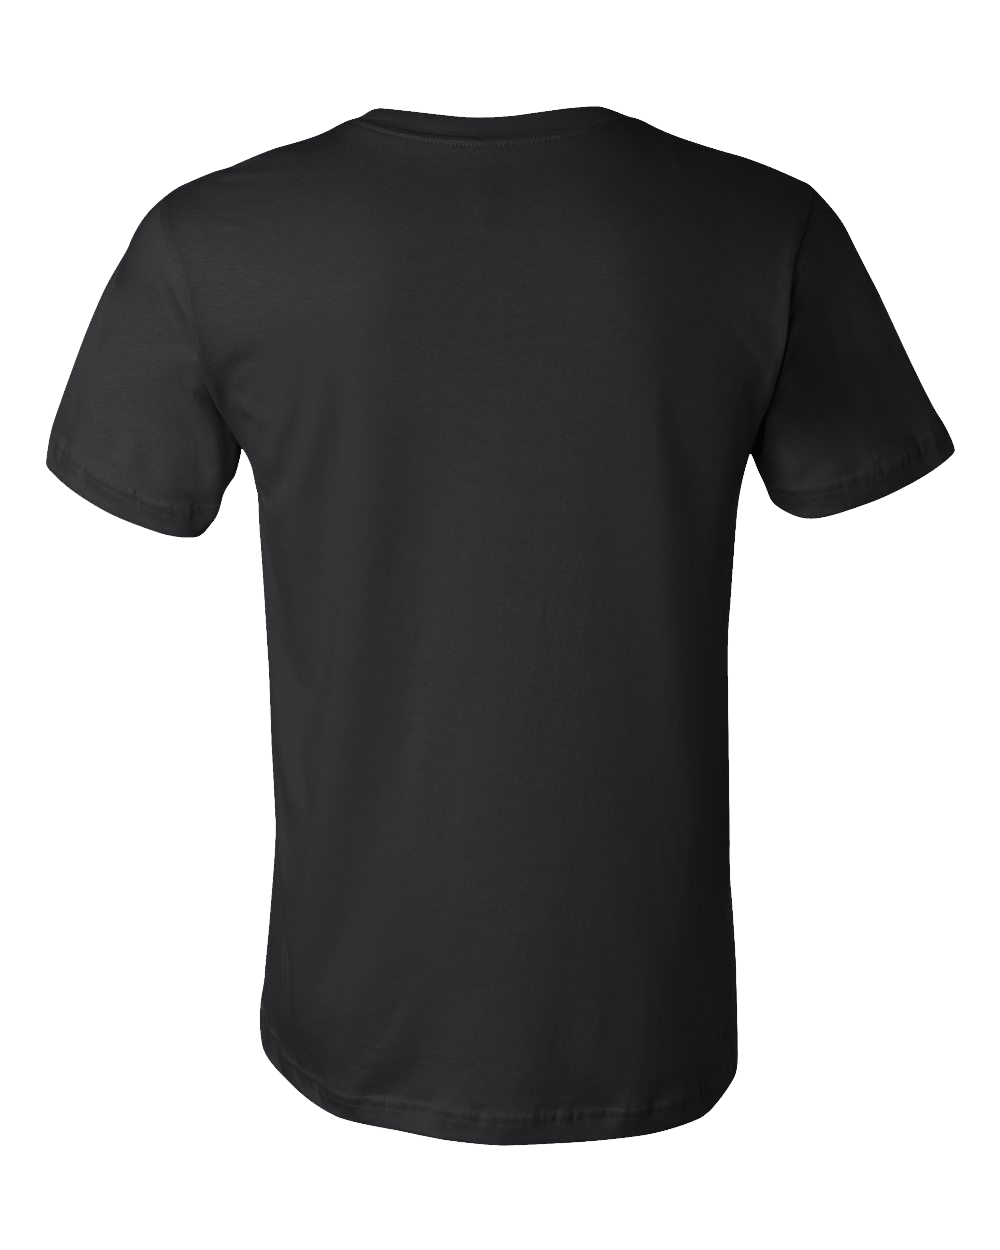 Standard Black Gleason, TN | Retro, Vintage Style Tennessee Pride  T-shirt